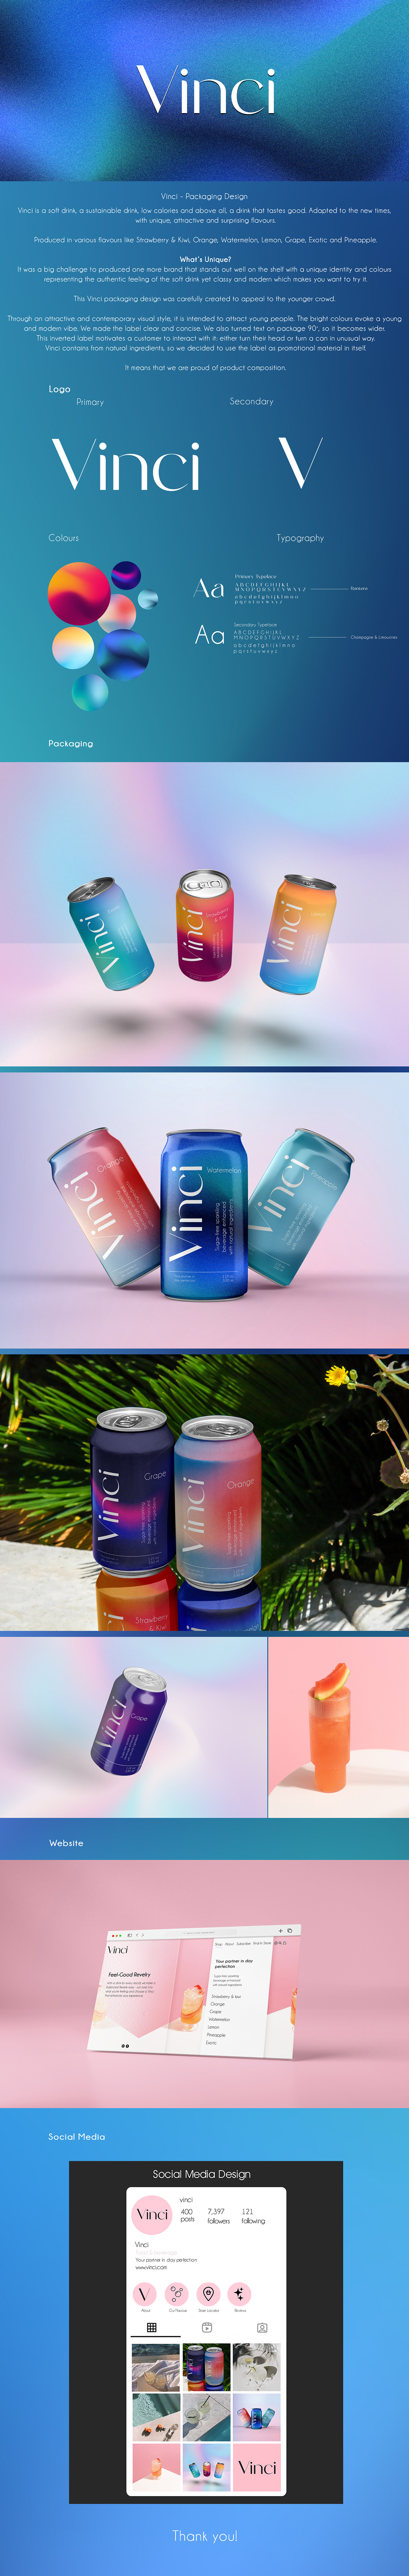 soft drink Packaging product design  UI/UX Logo Design packaging design visual identity Advertising  katerina theodosiadou Web Design 